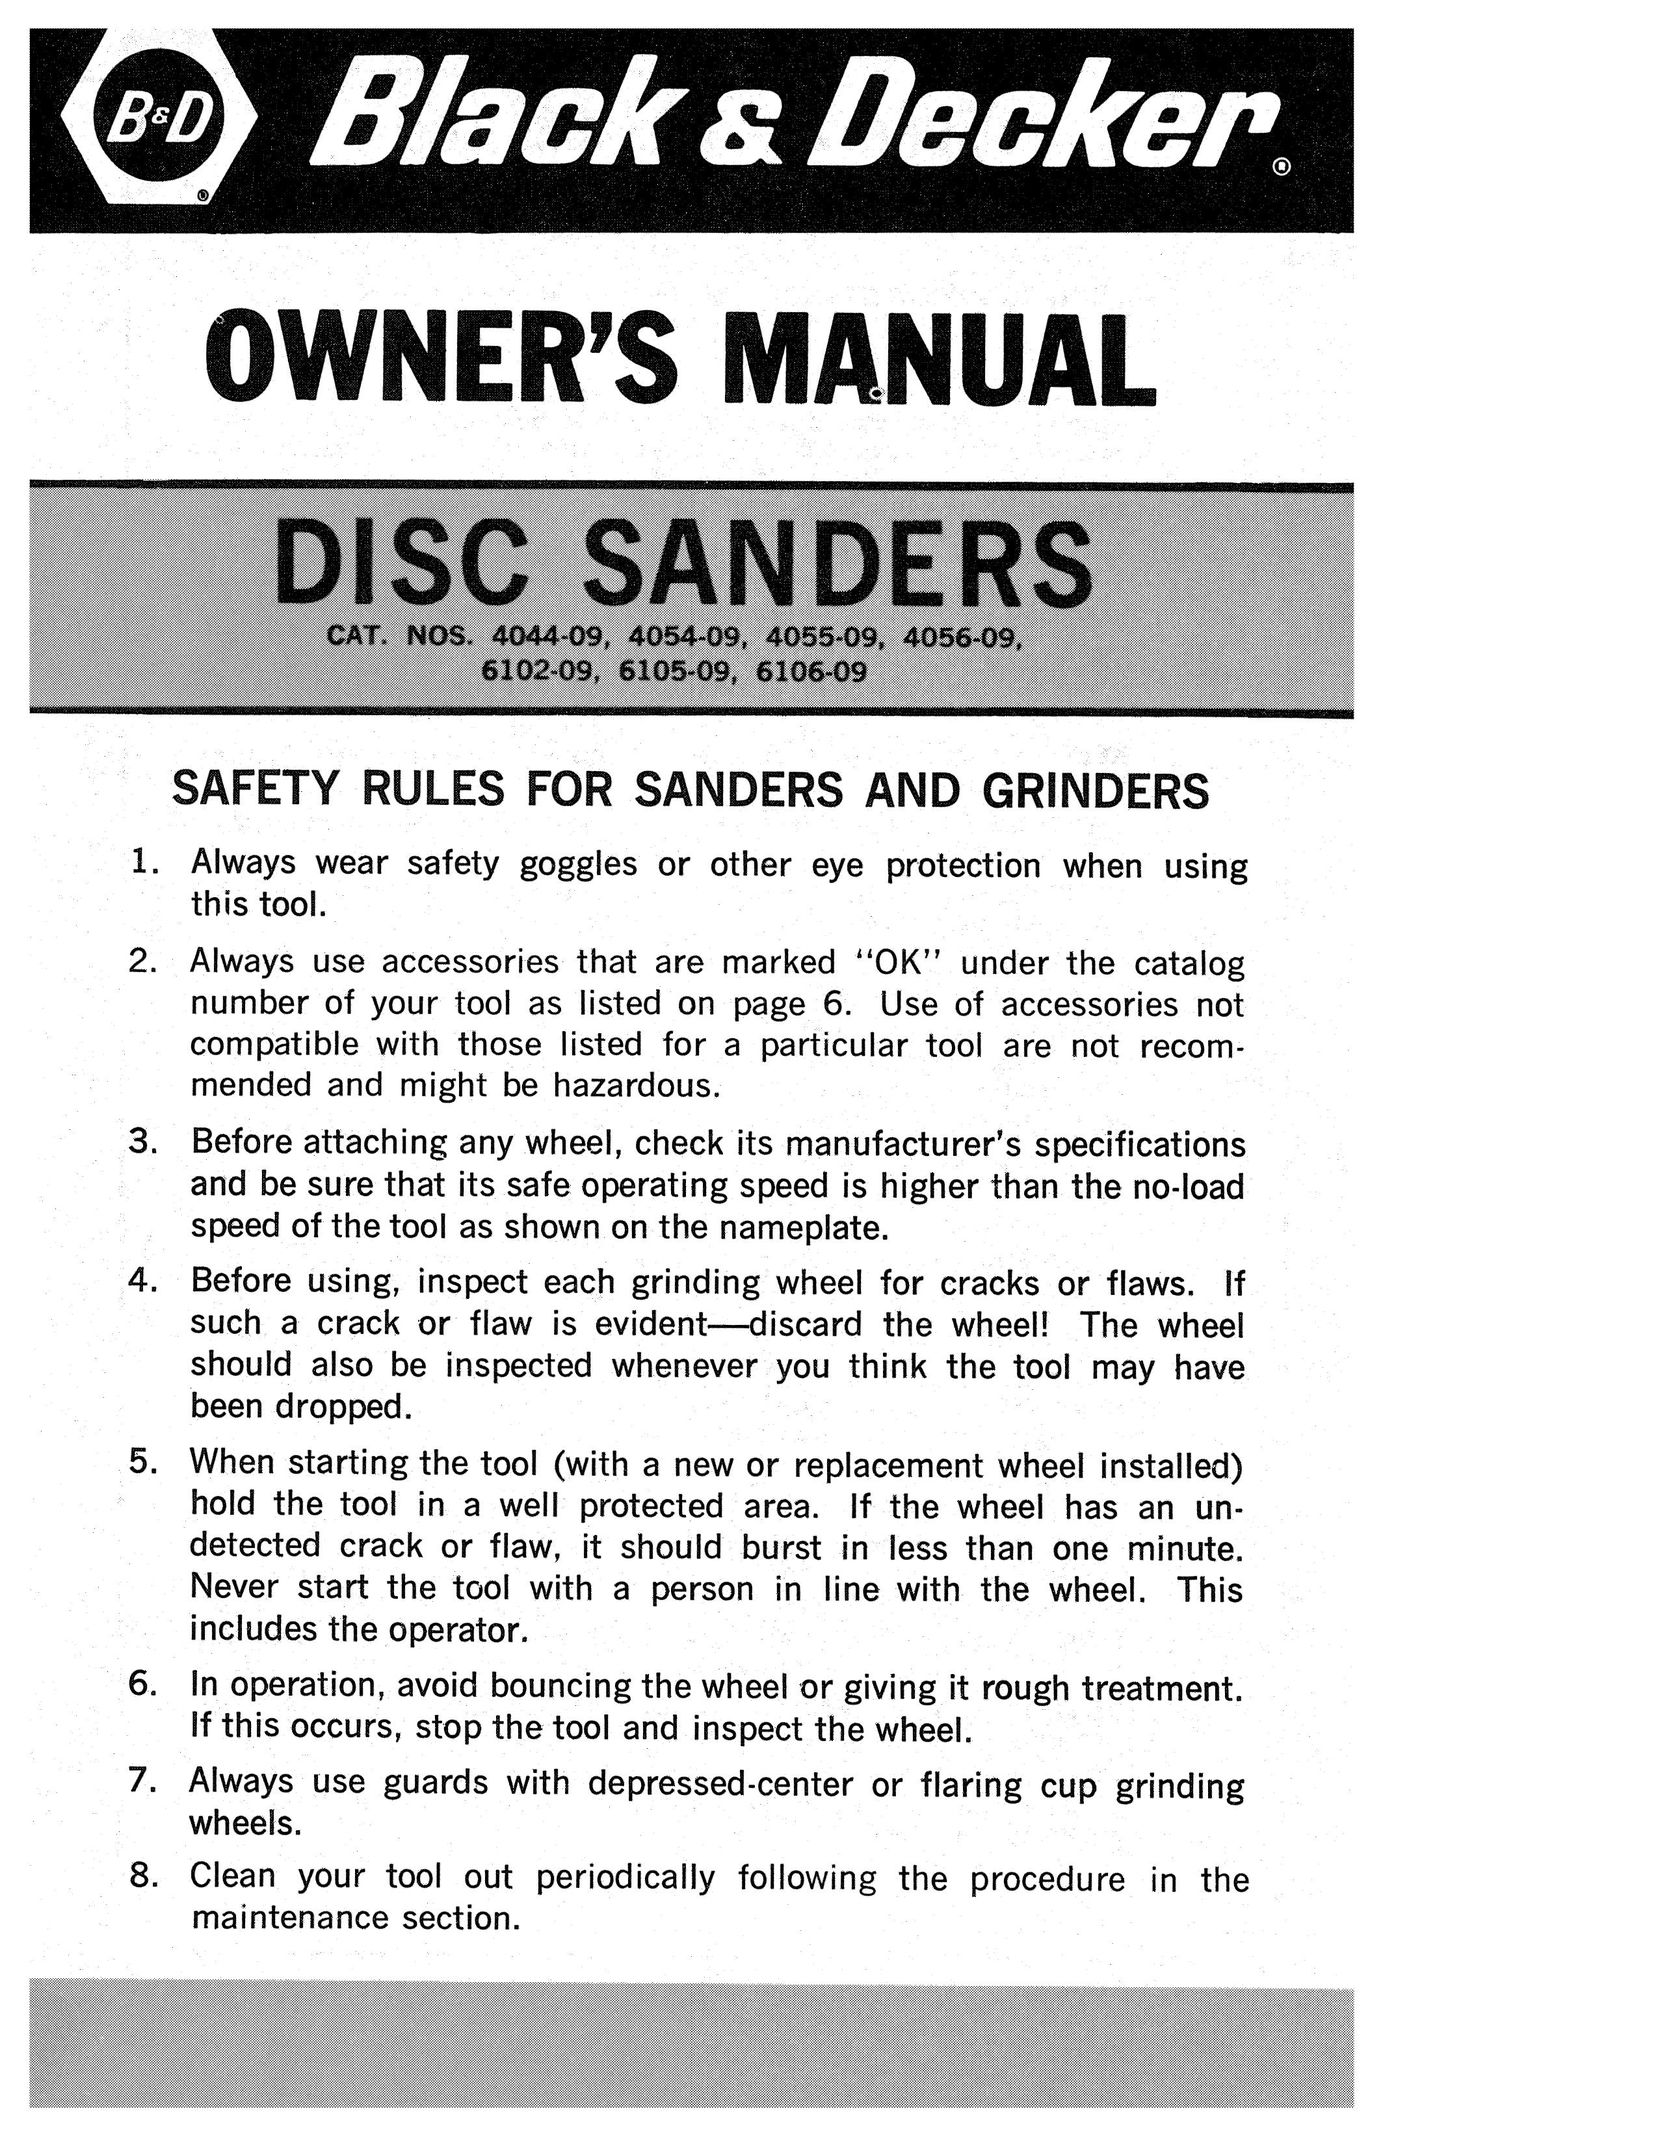 Black & Decker 6102-09 Sander User Manual